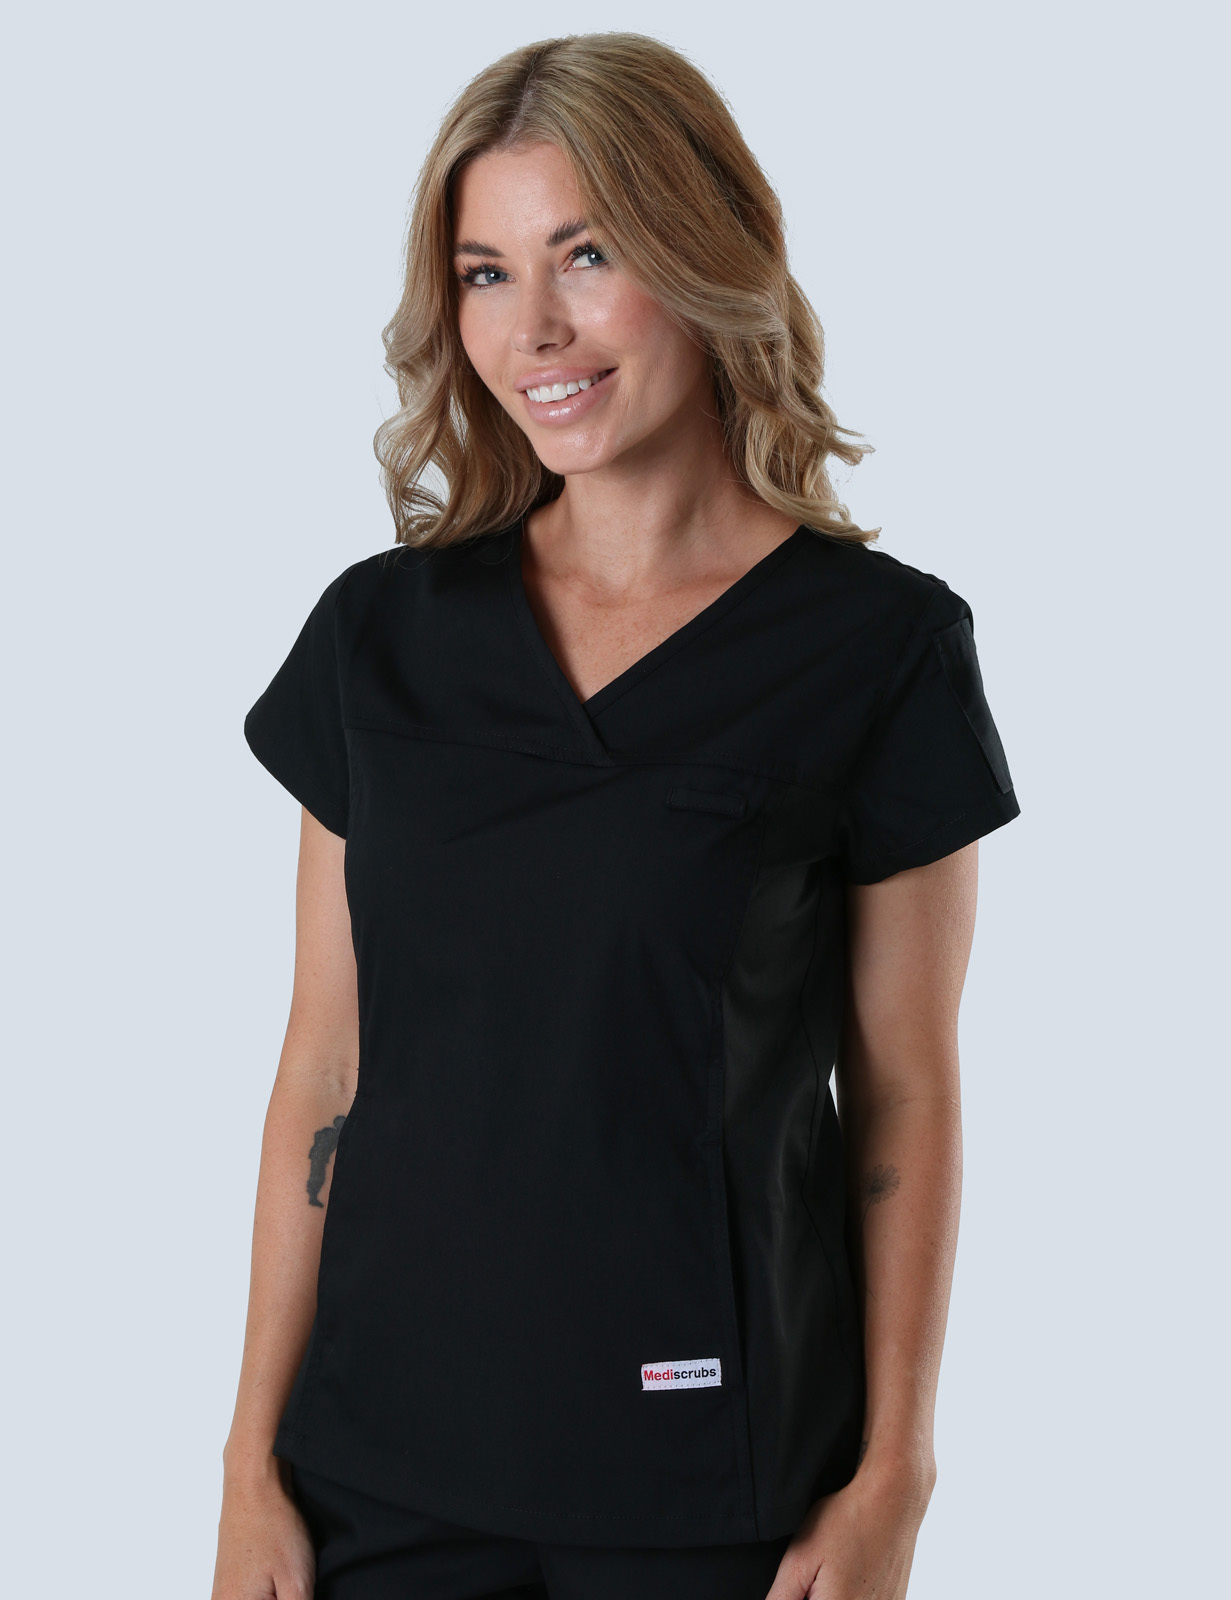 Logan Hospital - Medical Imaging Radiographer (Women's Fit Spandex Scrub Top and Cargo Pants in Black incl Logos)